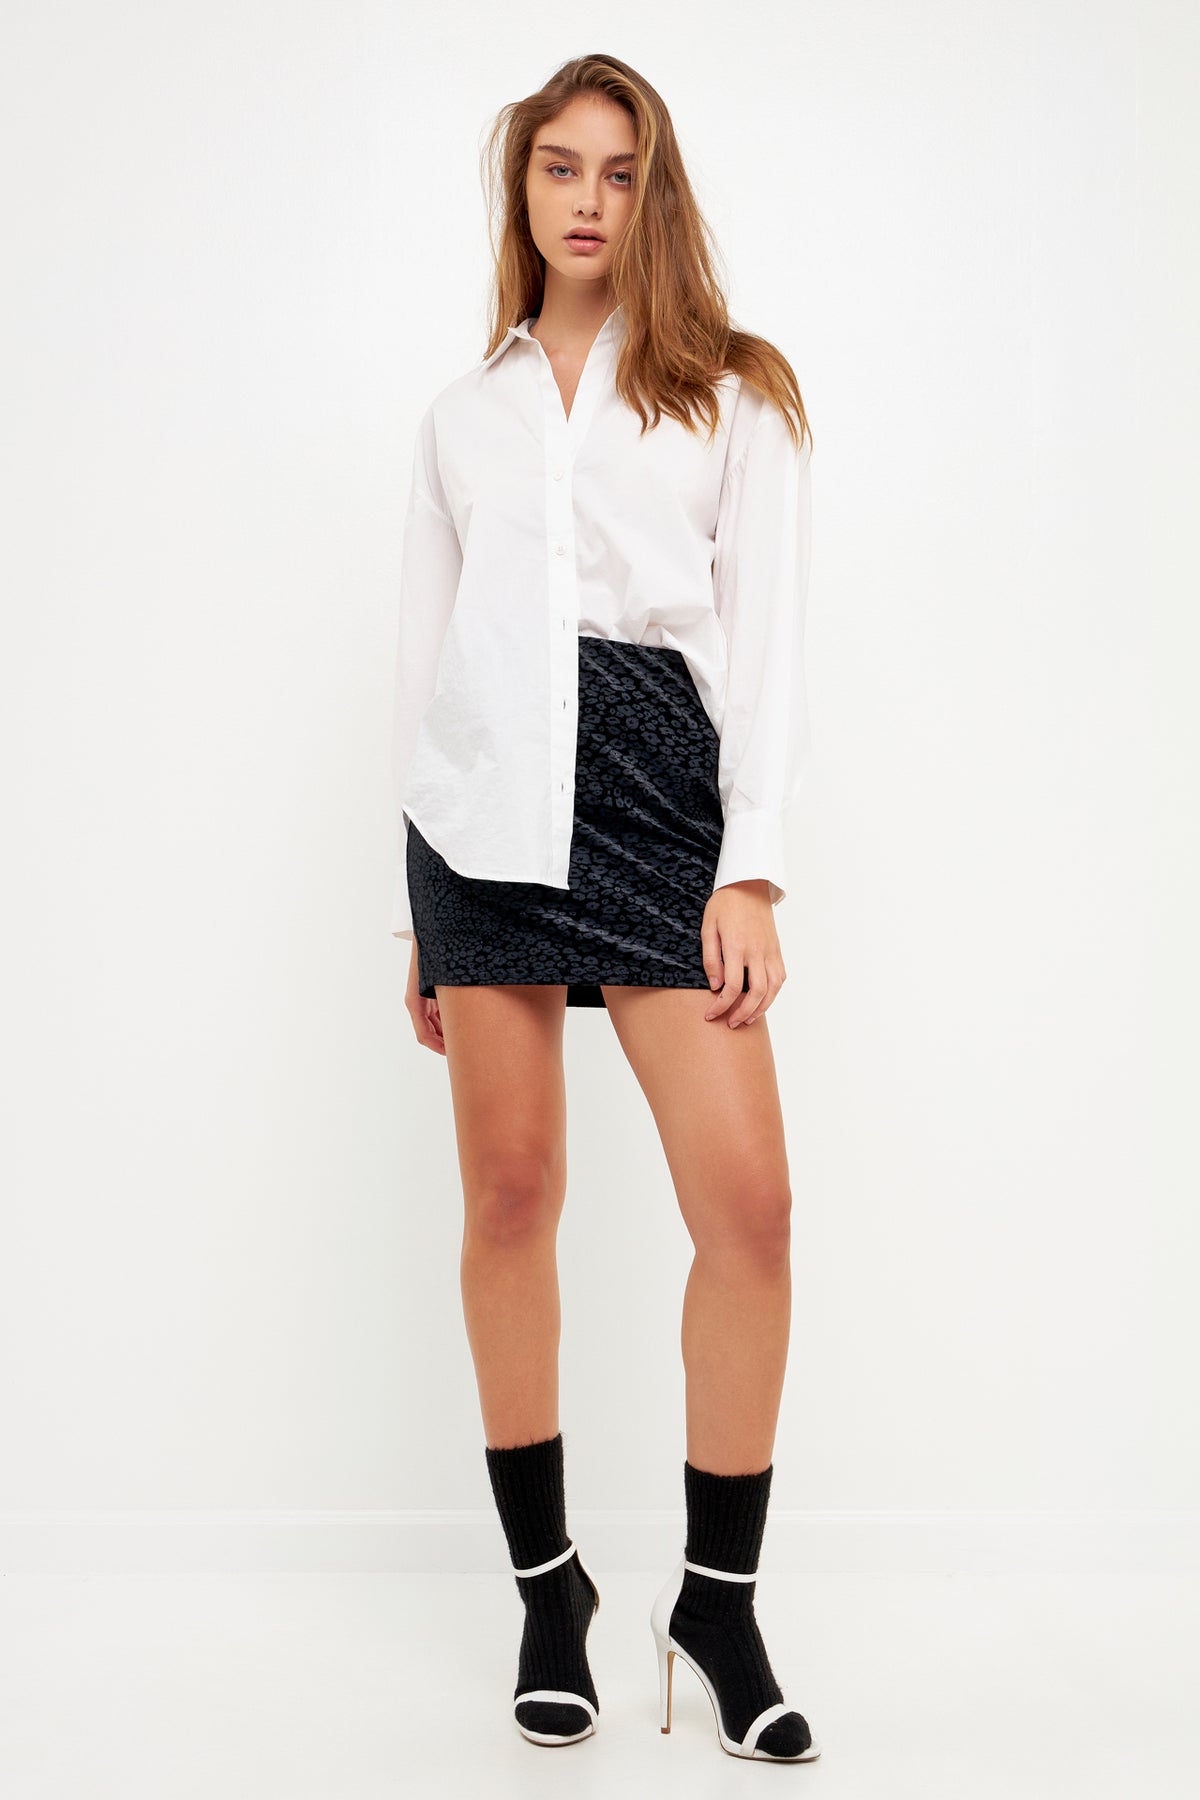 GREY LAB - Animal Print Velvet Skirt - SKIRTS available at Objectrare